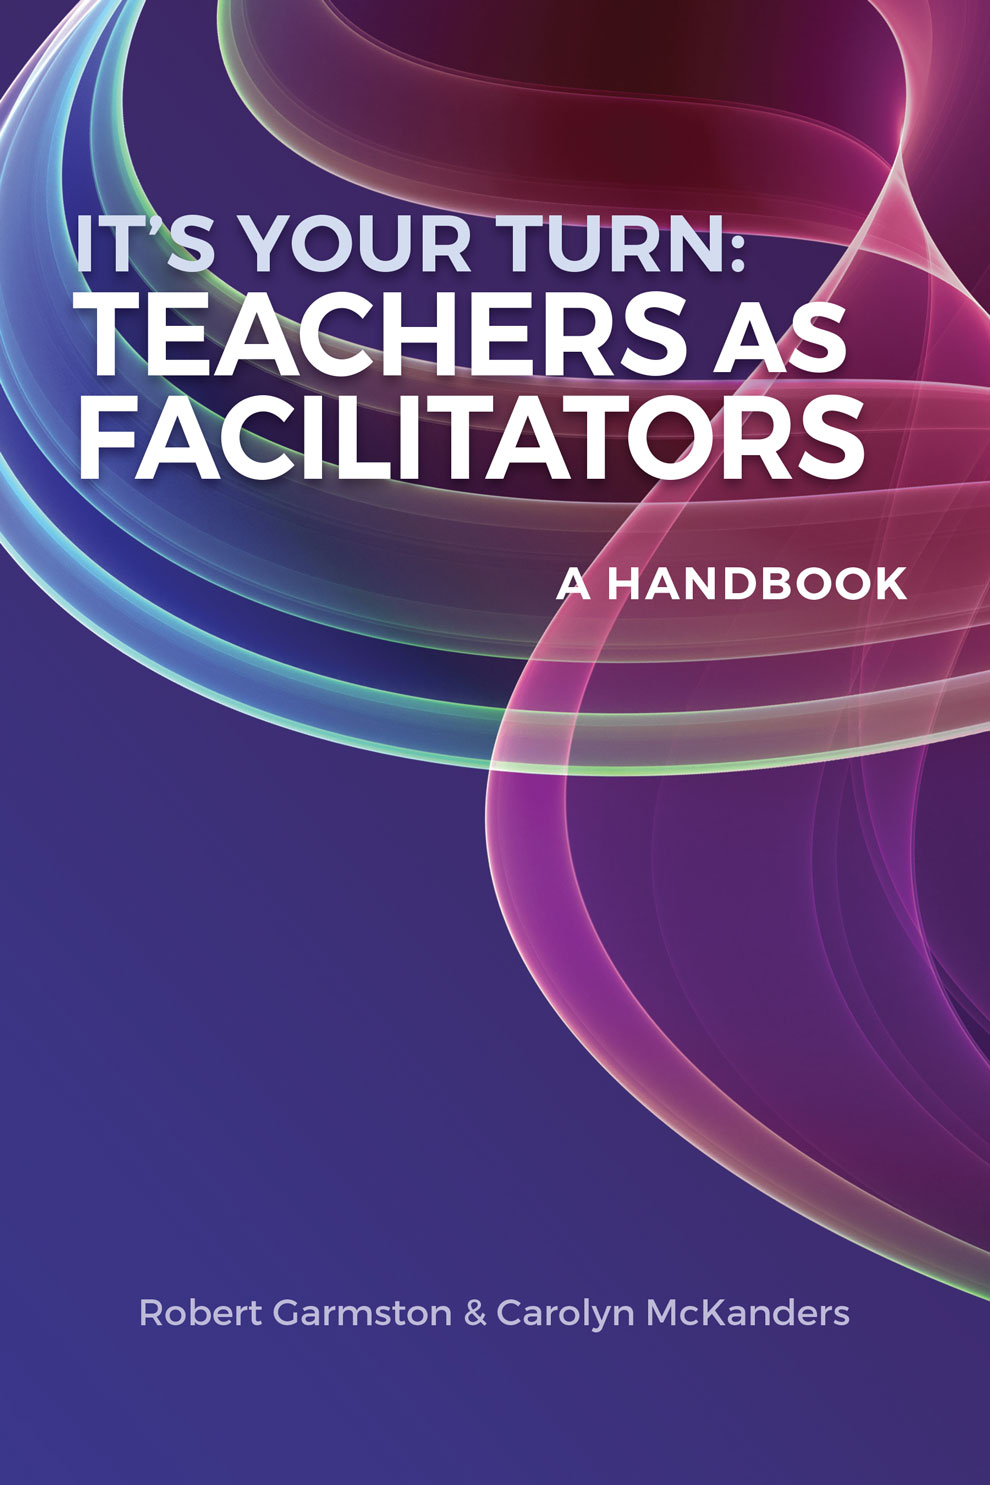 It's Your Turn: Teachers As Facilitators - A Handbook